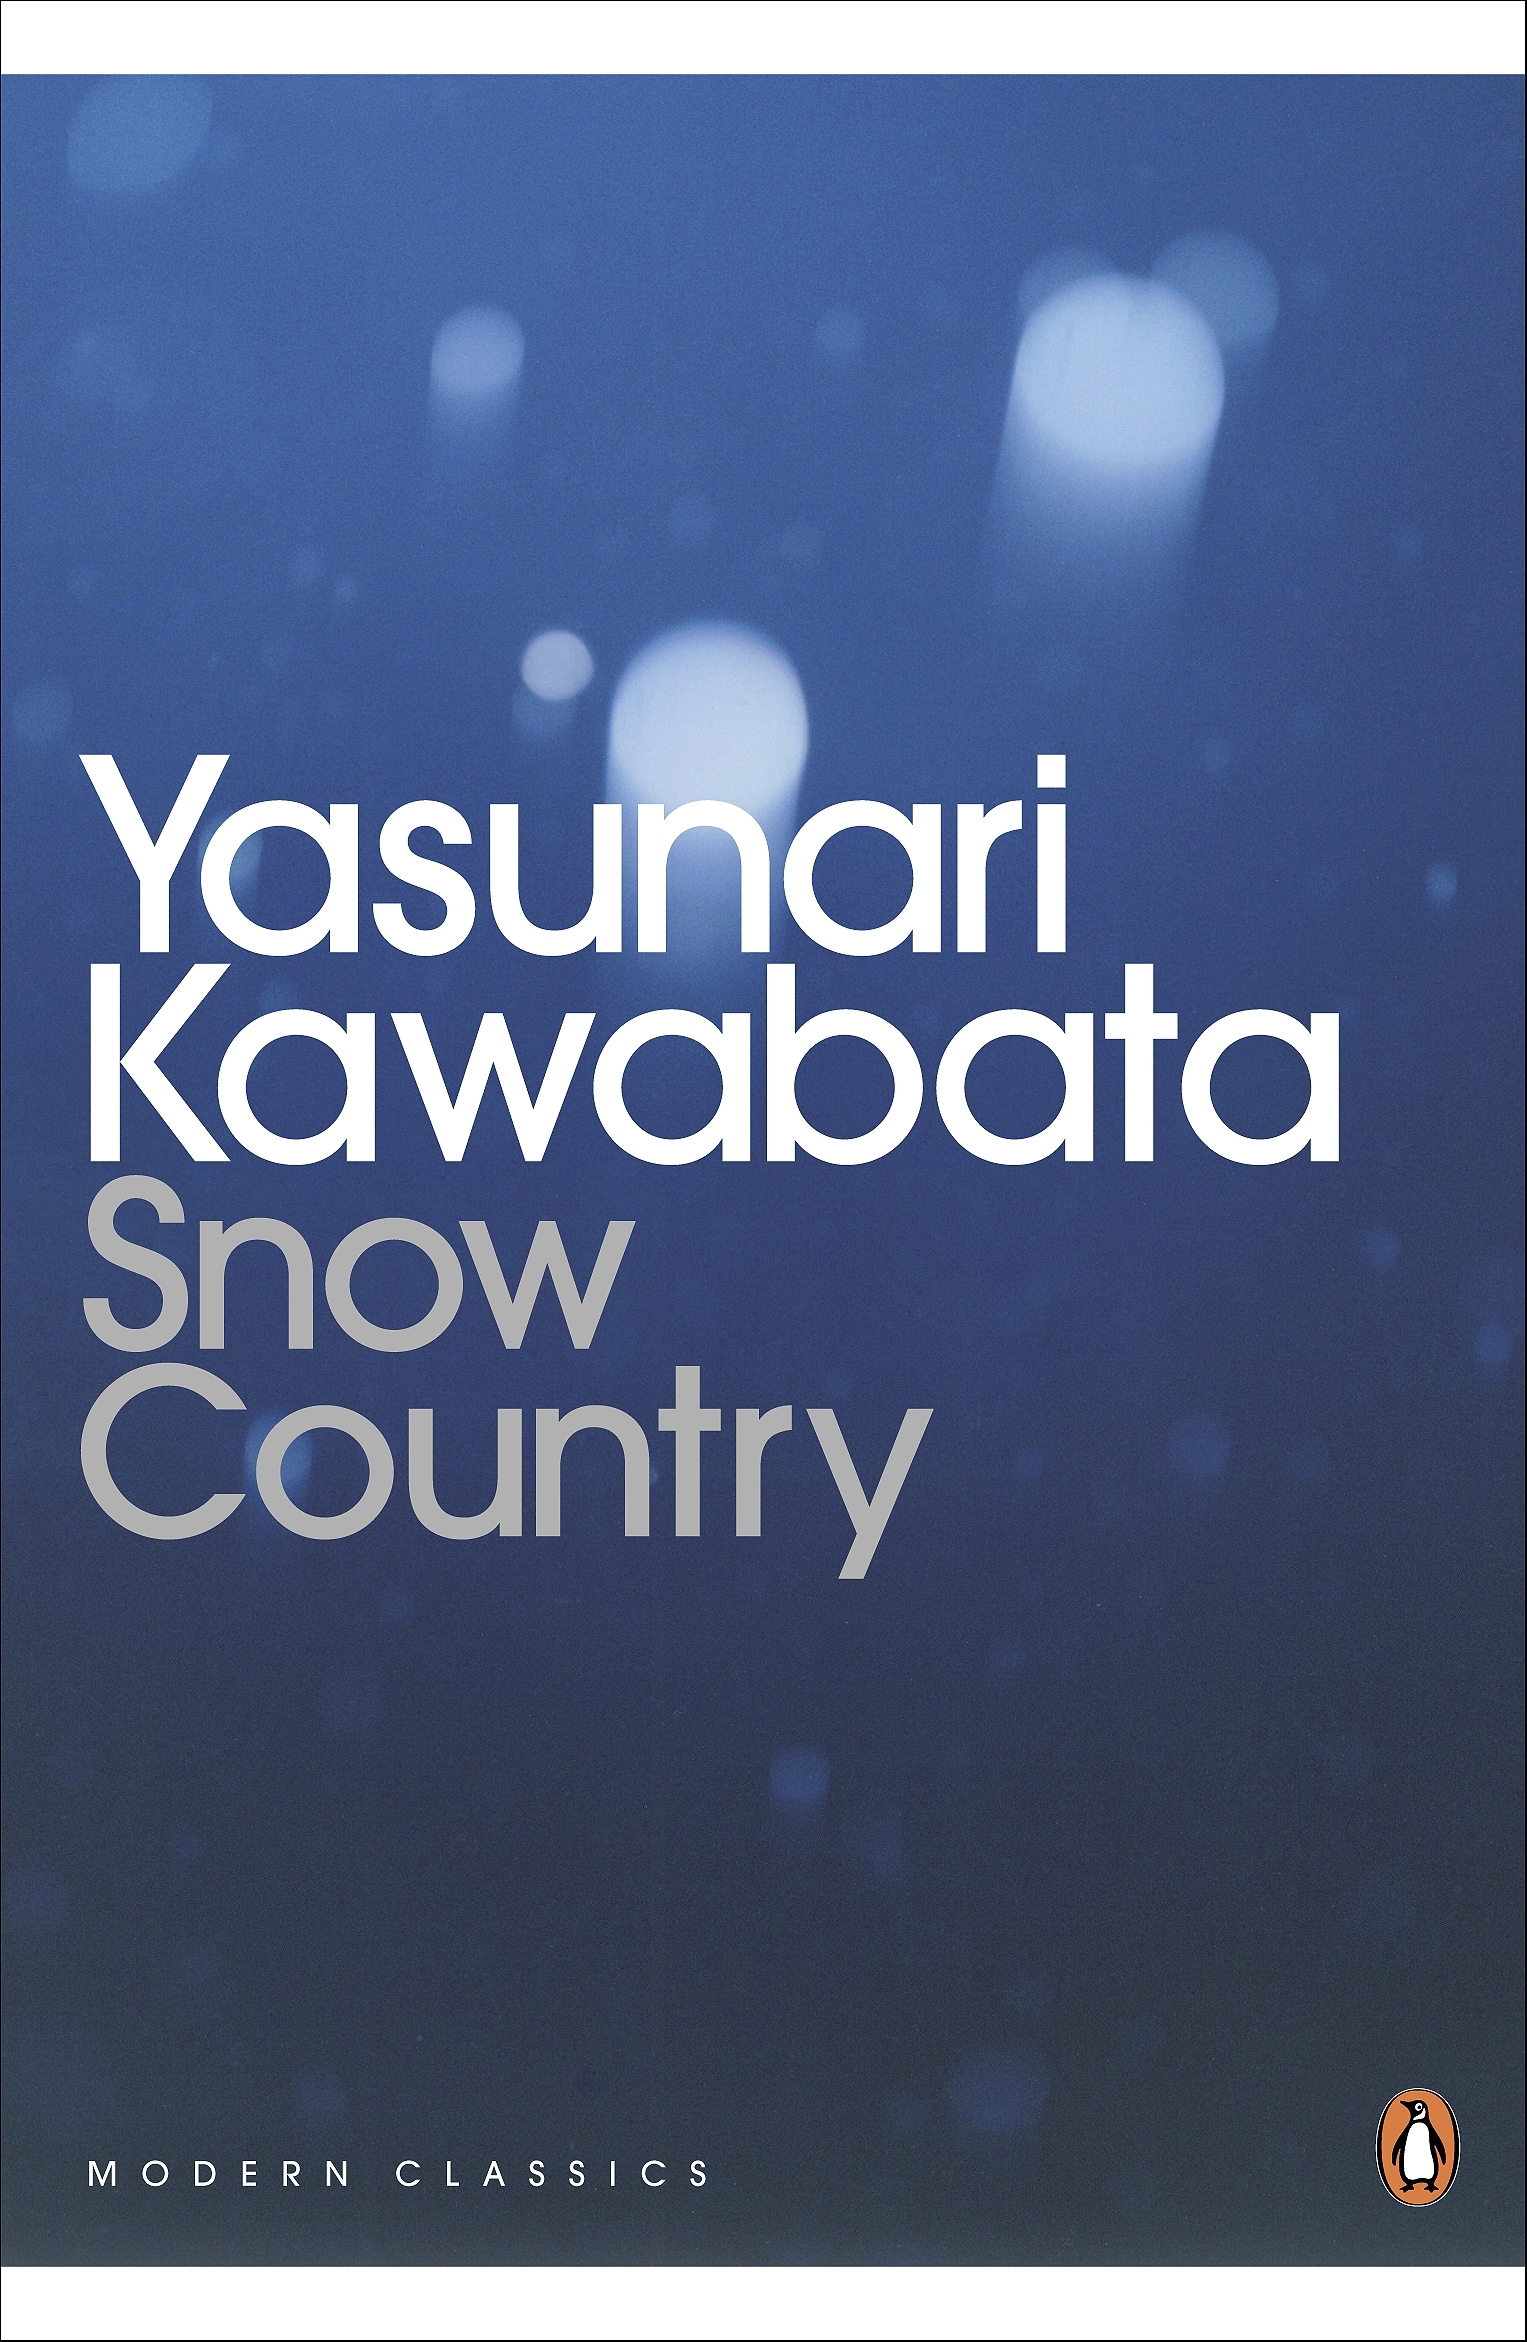 Snow Country by Yasunari Kawabata - Penguin Books Australia